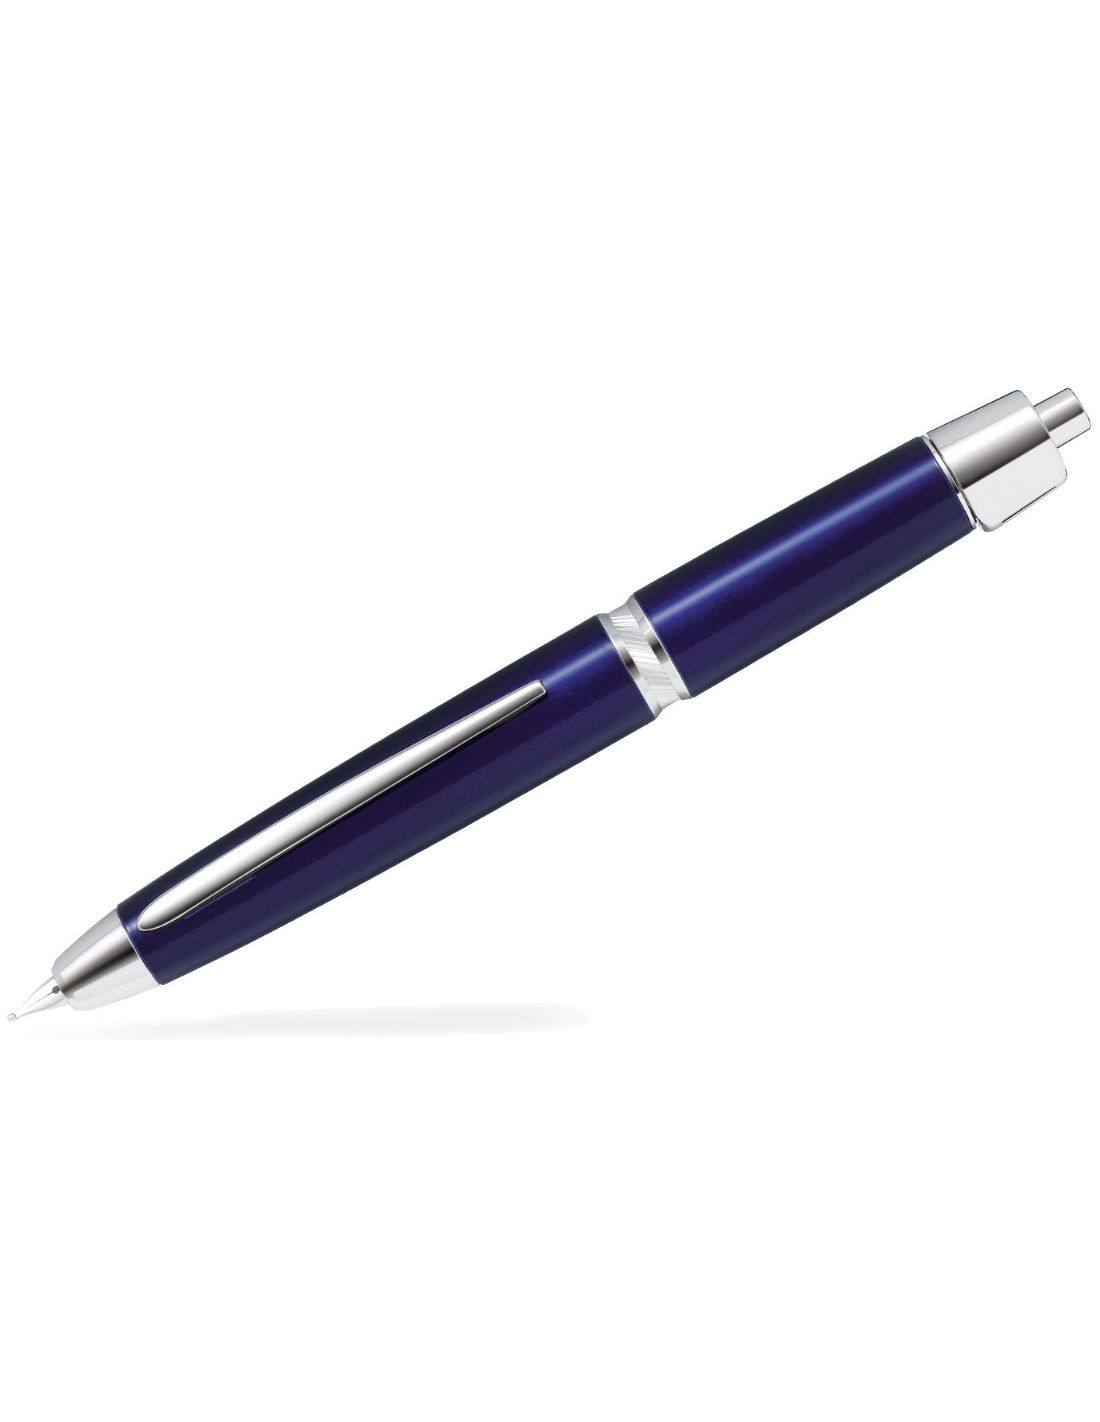 Pilot CAPLESS LS - Vanishing Point - Rhodium - Blue - Fountain pen